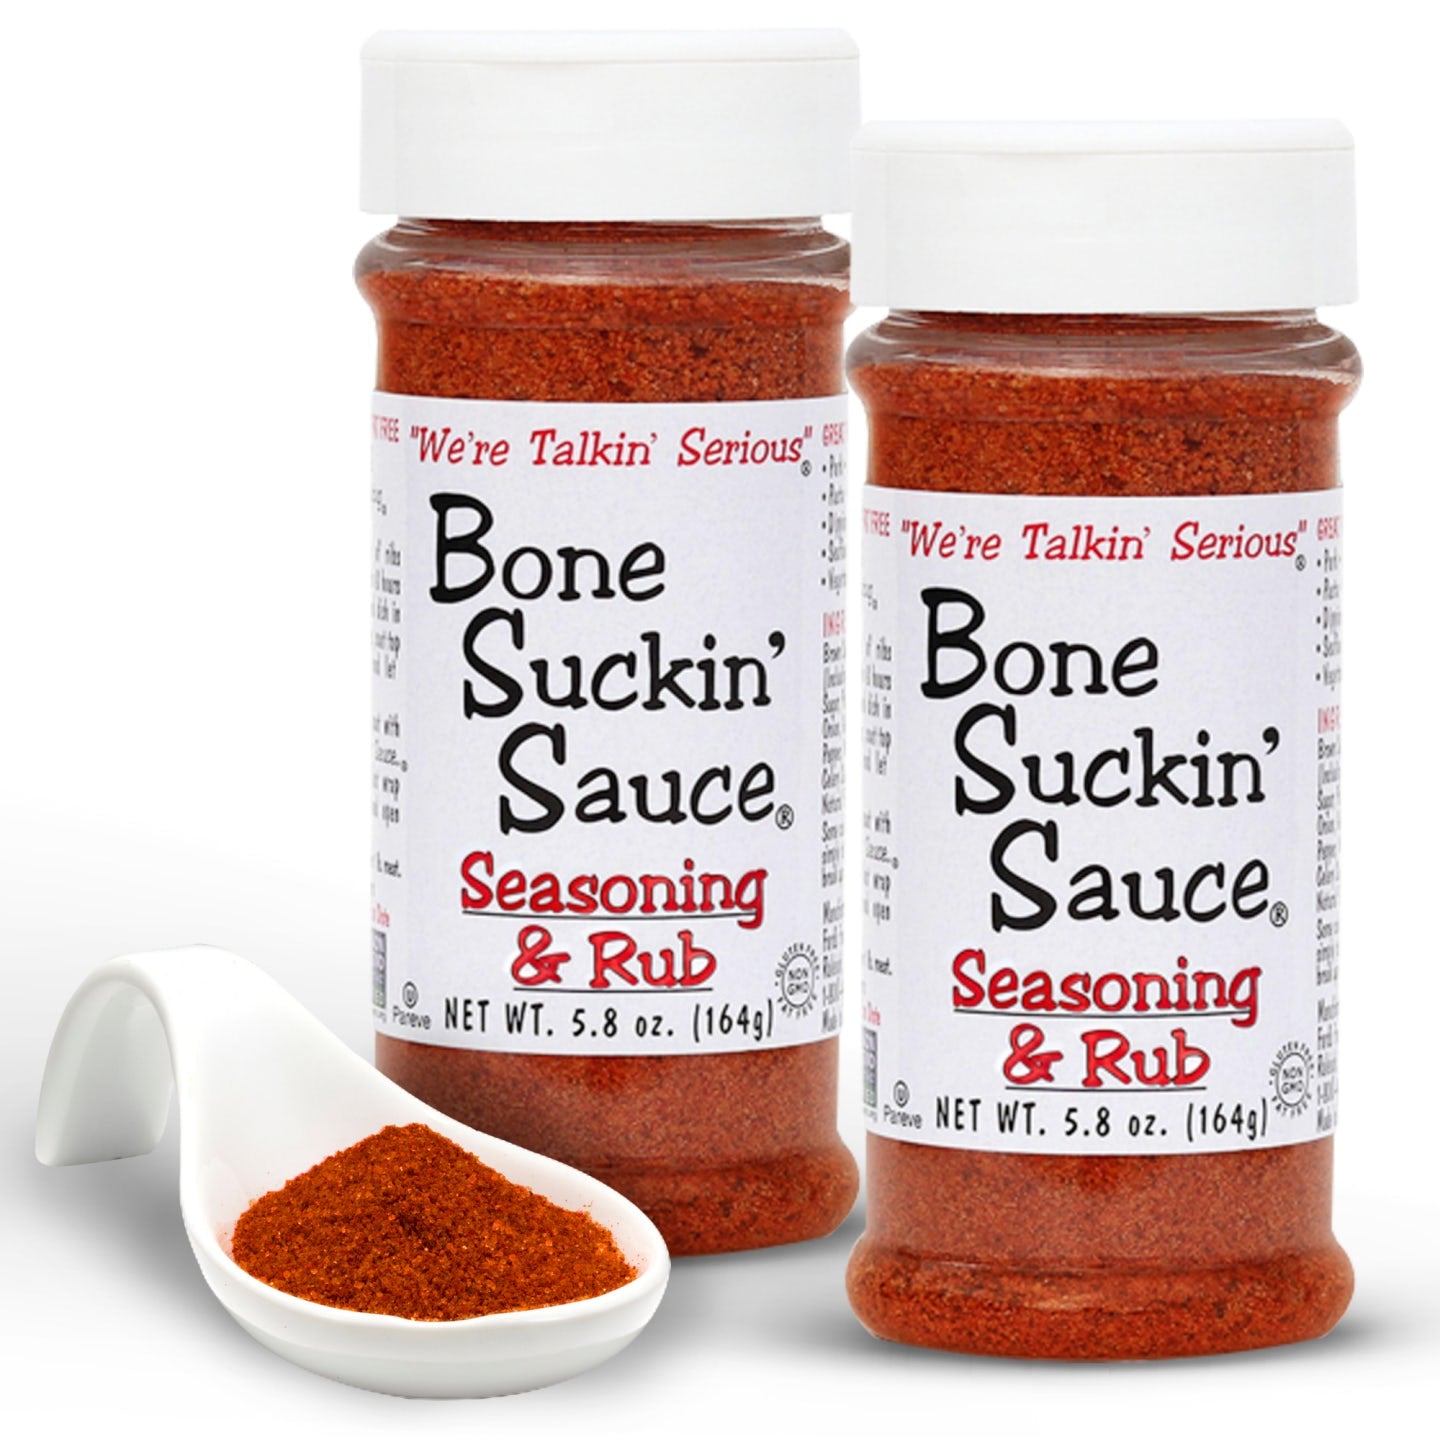 Bone Suckin' Seasoning & Rub, Original Blend, 5.8 Oz - Grilling Rubs, Dry Steak Rub, Great on Ribs, Pork, Beef, Chicken, Seafood, Pasta, Vegetables, Steaks - Gluten Free, Fat Free 2 pack